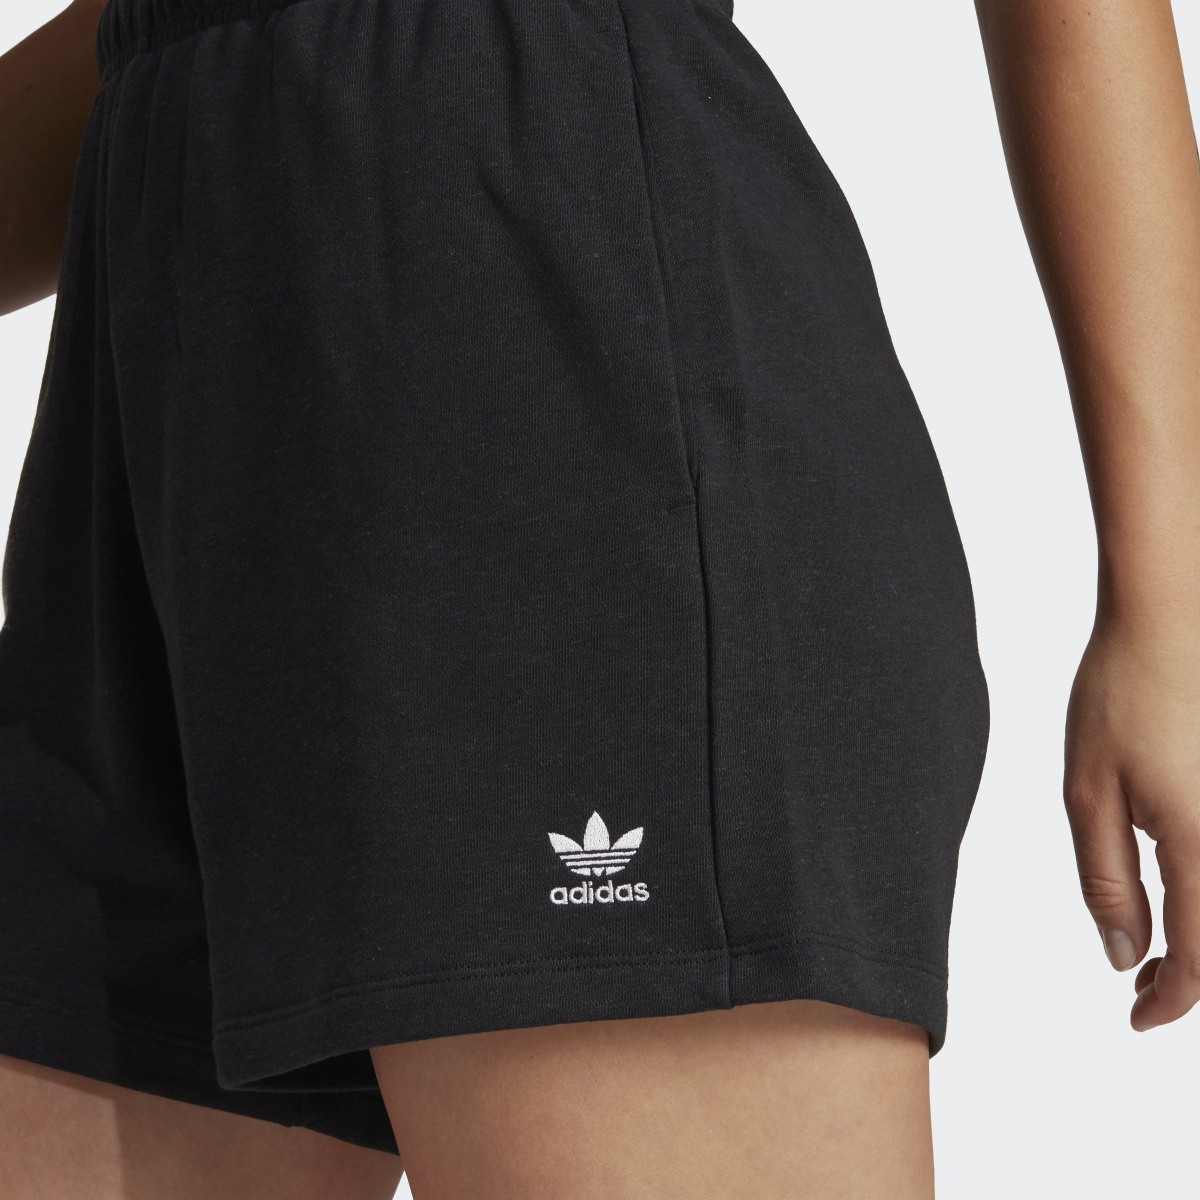 Adidas Essentials+ Made with Hemp Shorts. 5